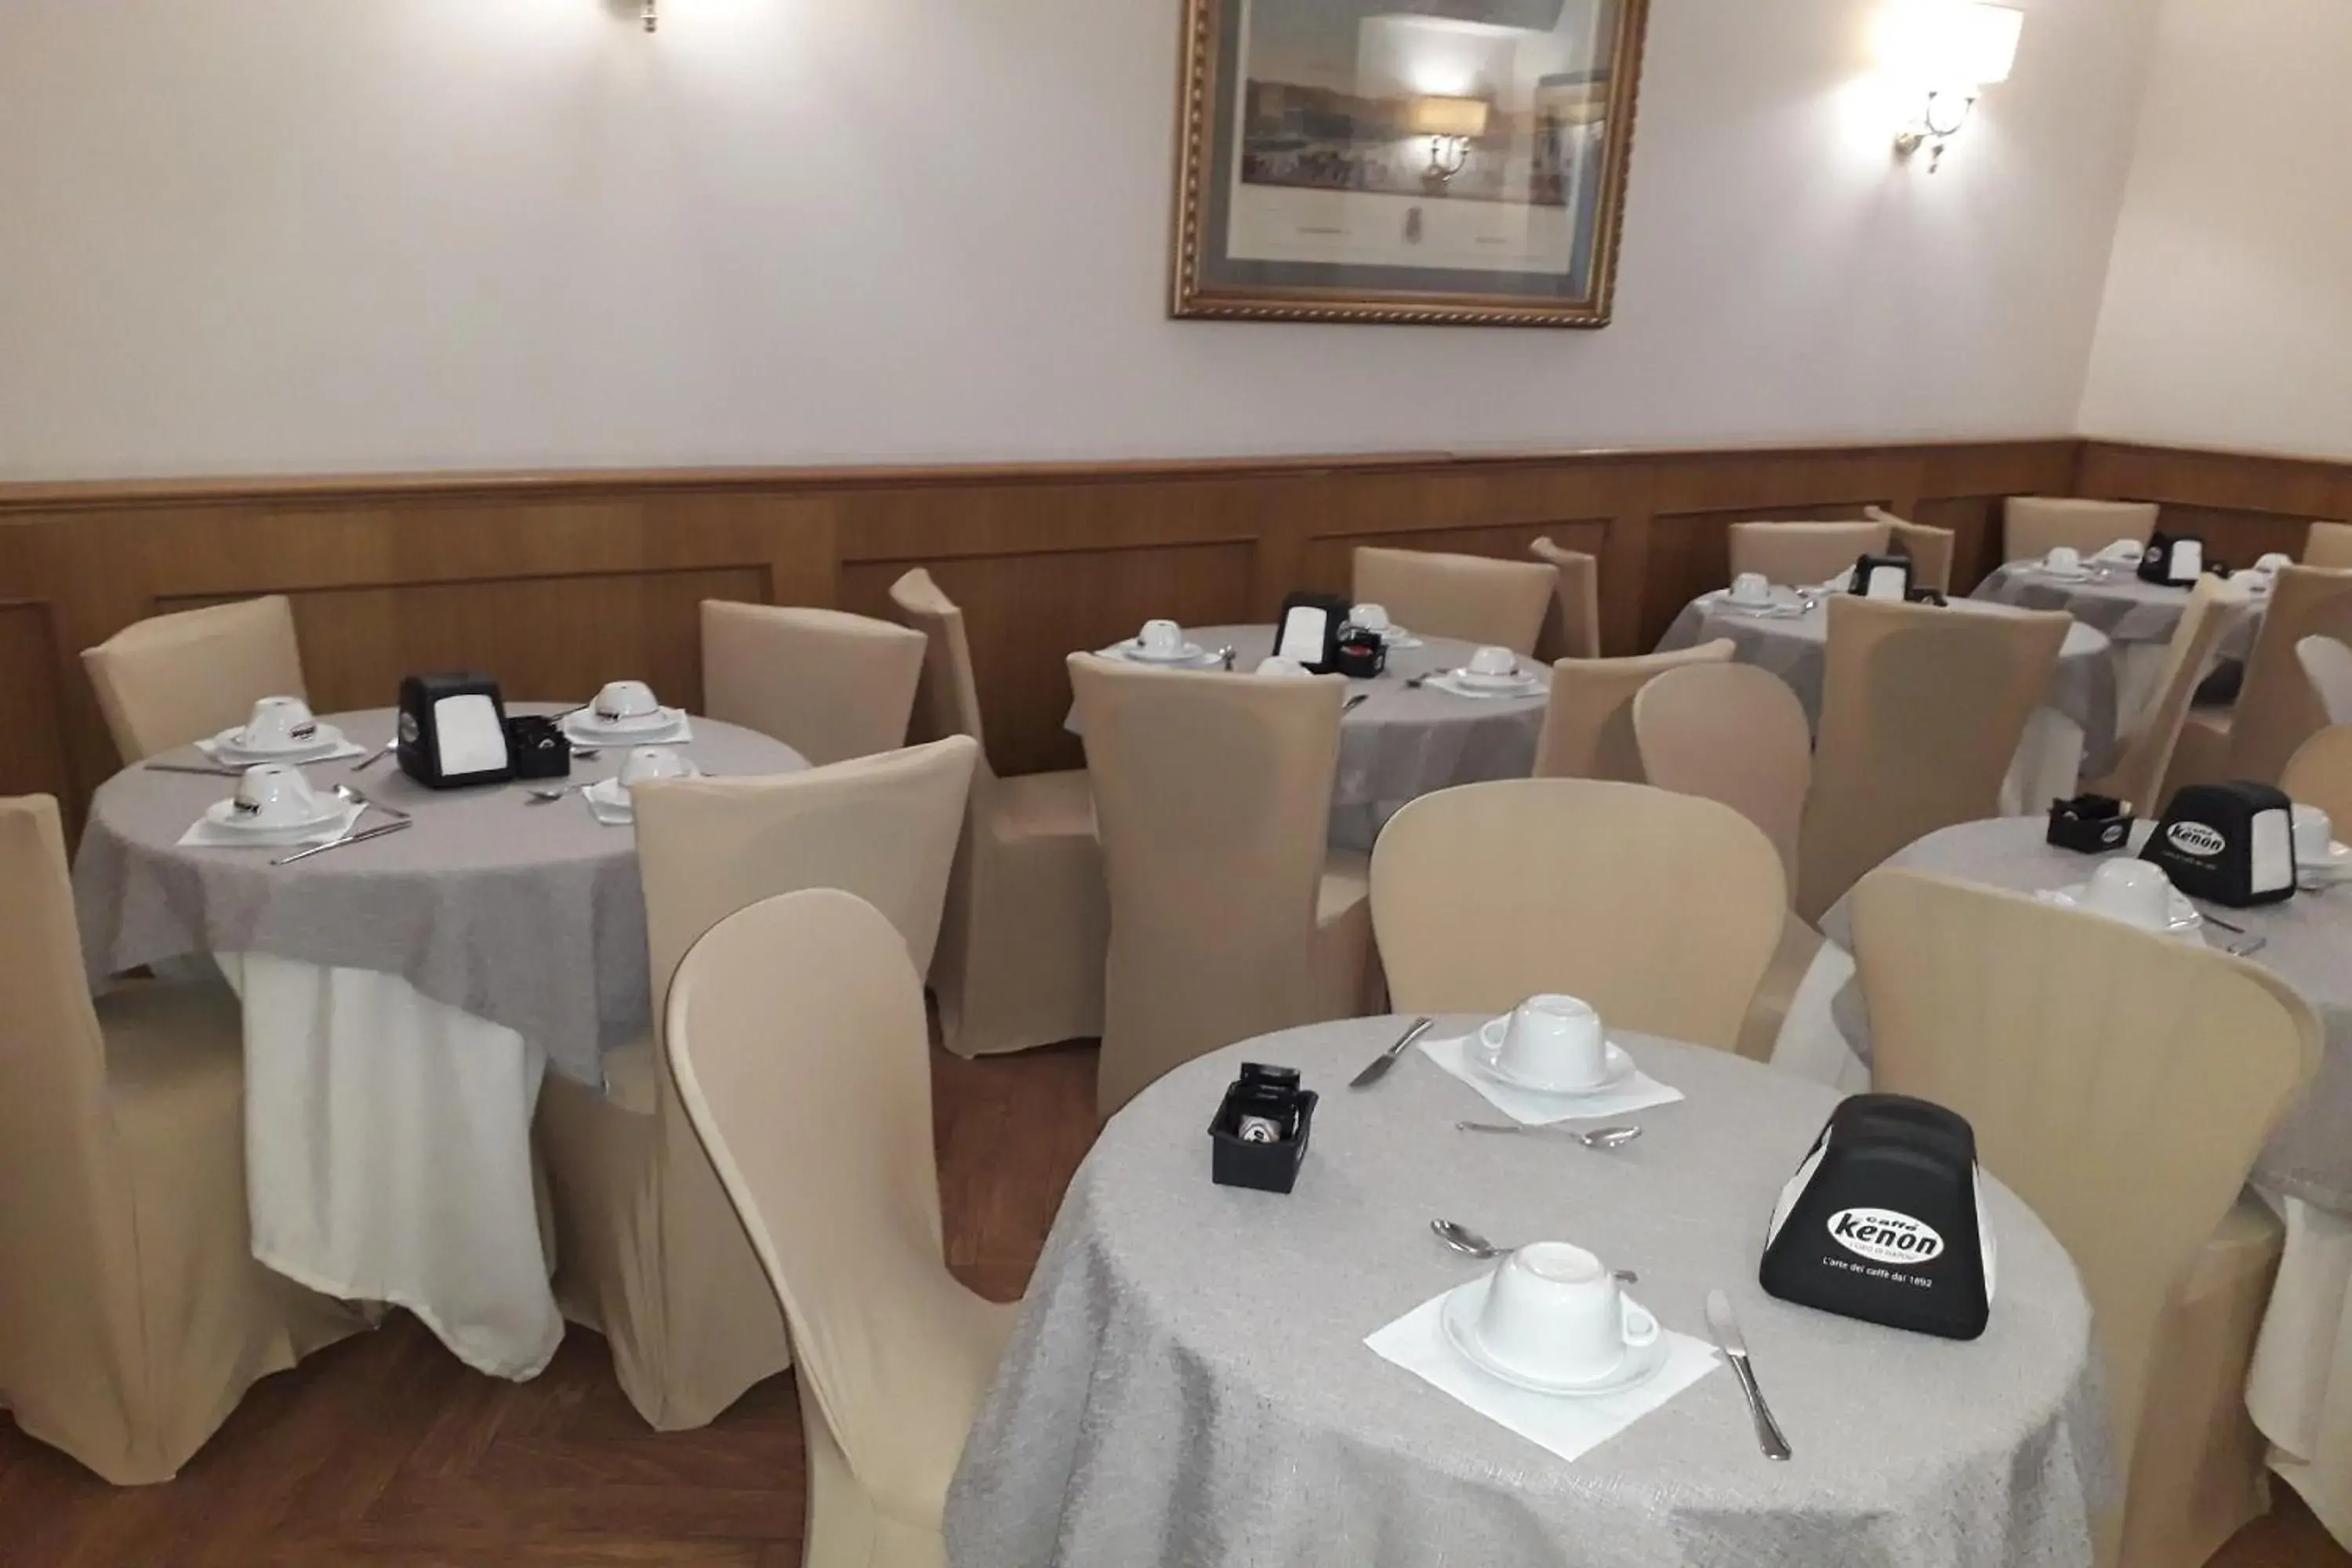 Breakfast, Restaurant/Places to Eat in Hotel Leopardi